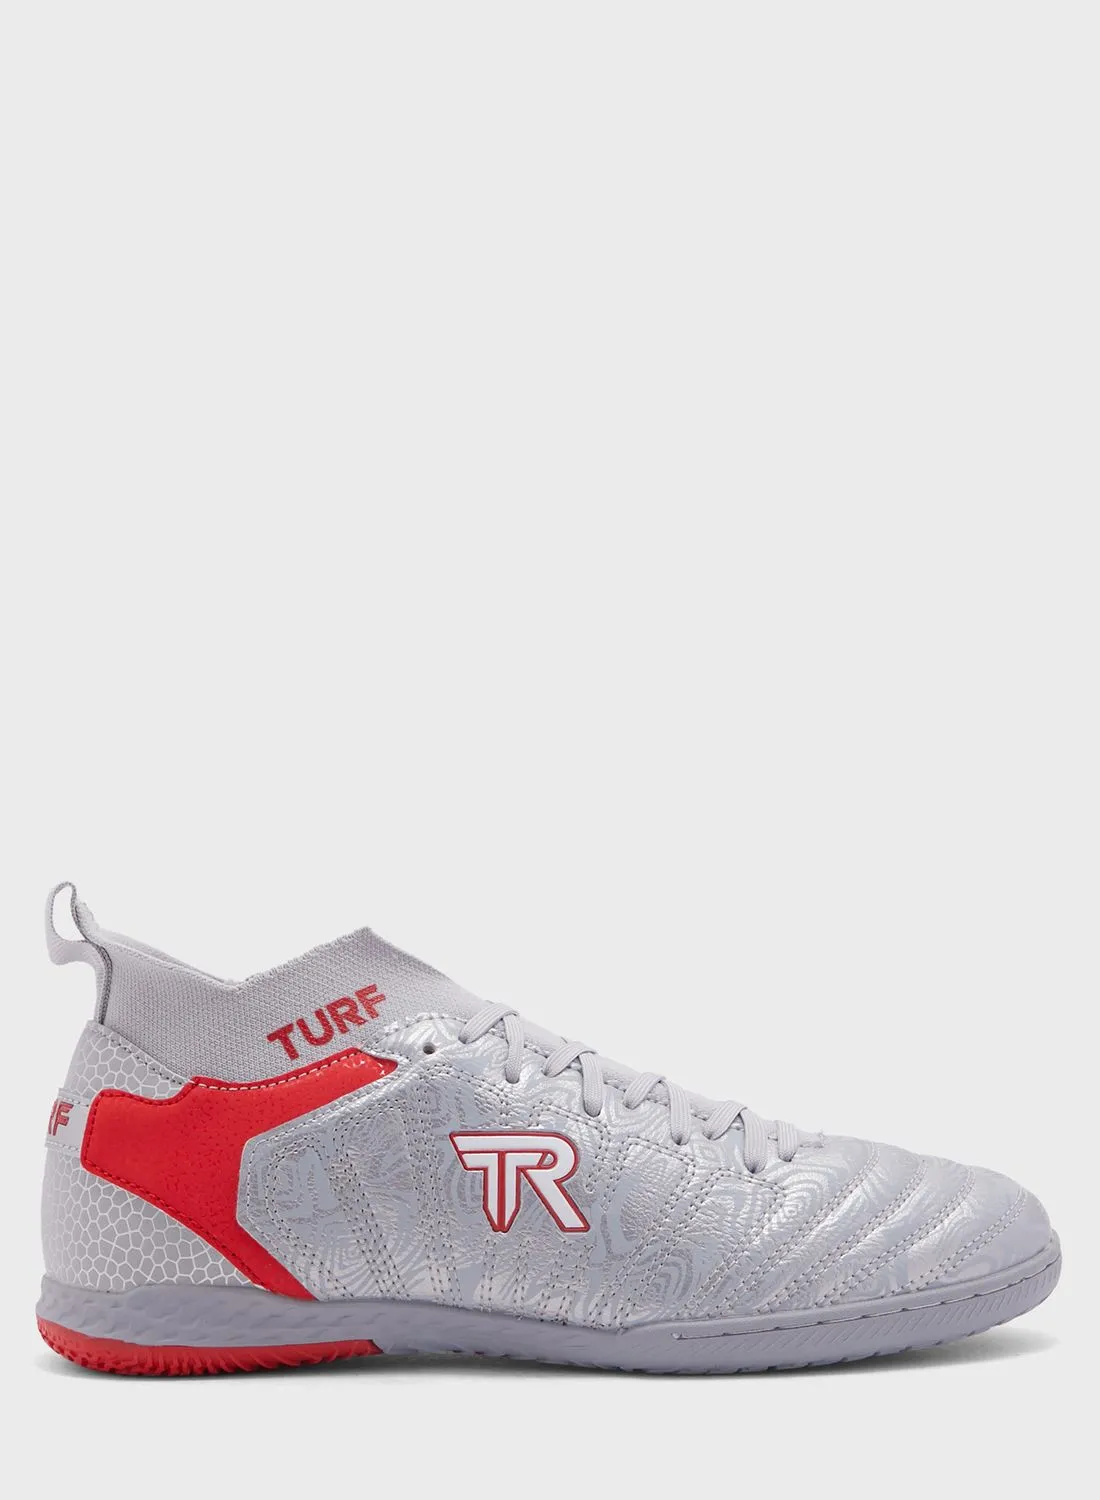 Turf Astro Turf Football Shoes